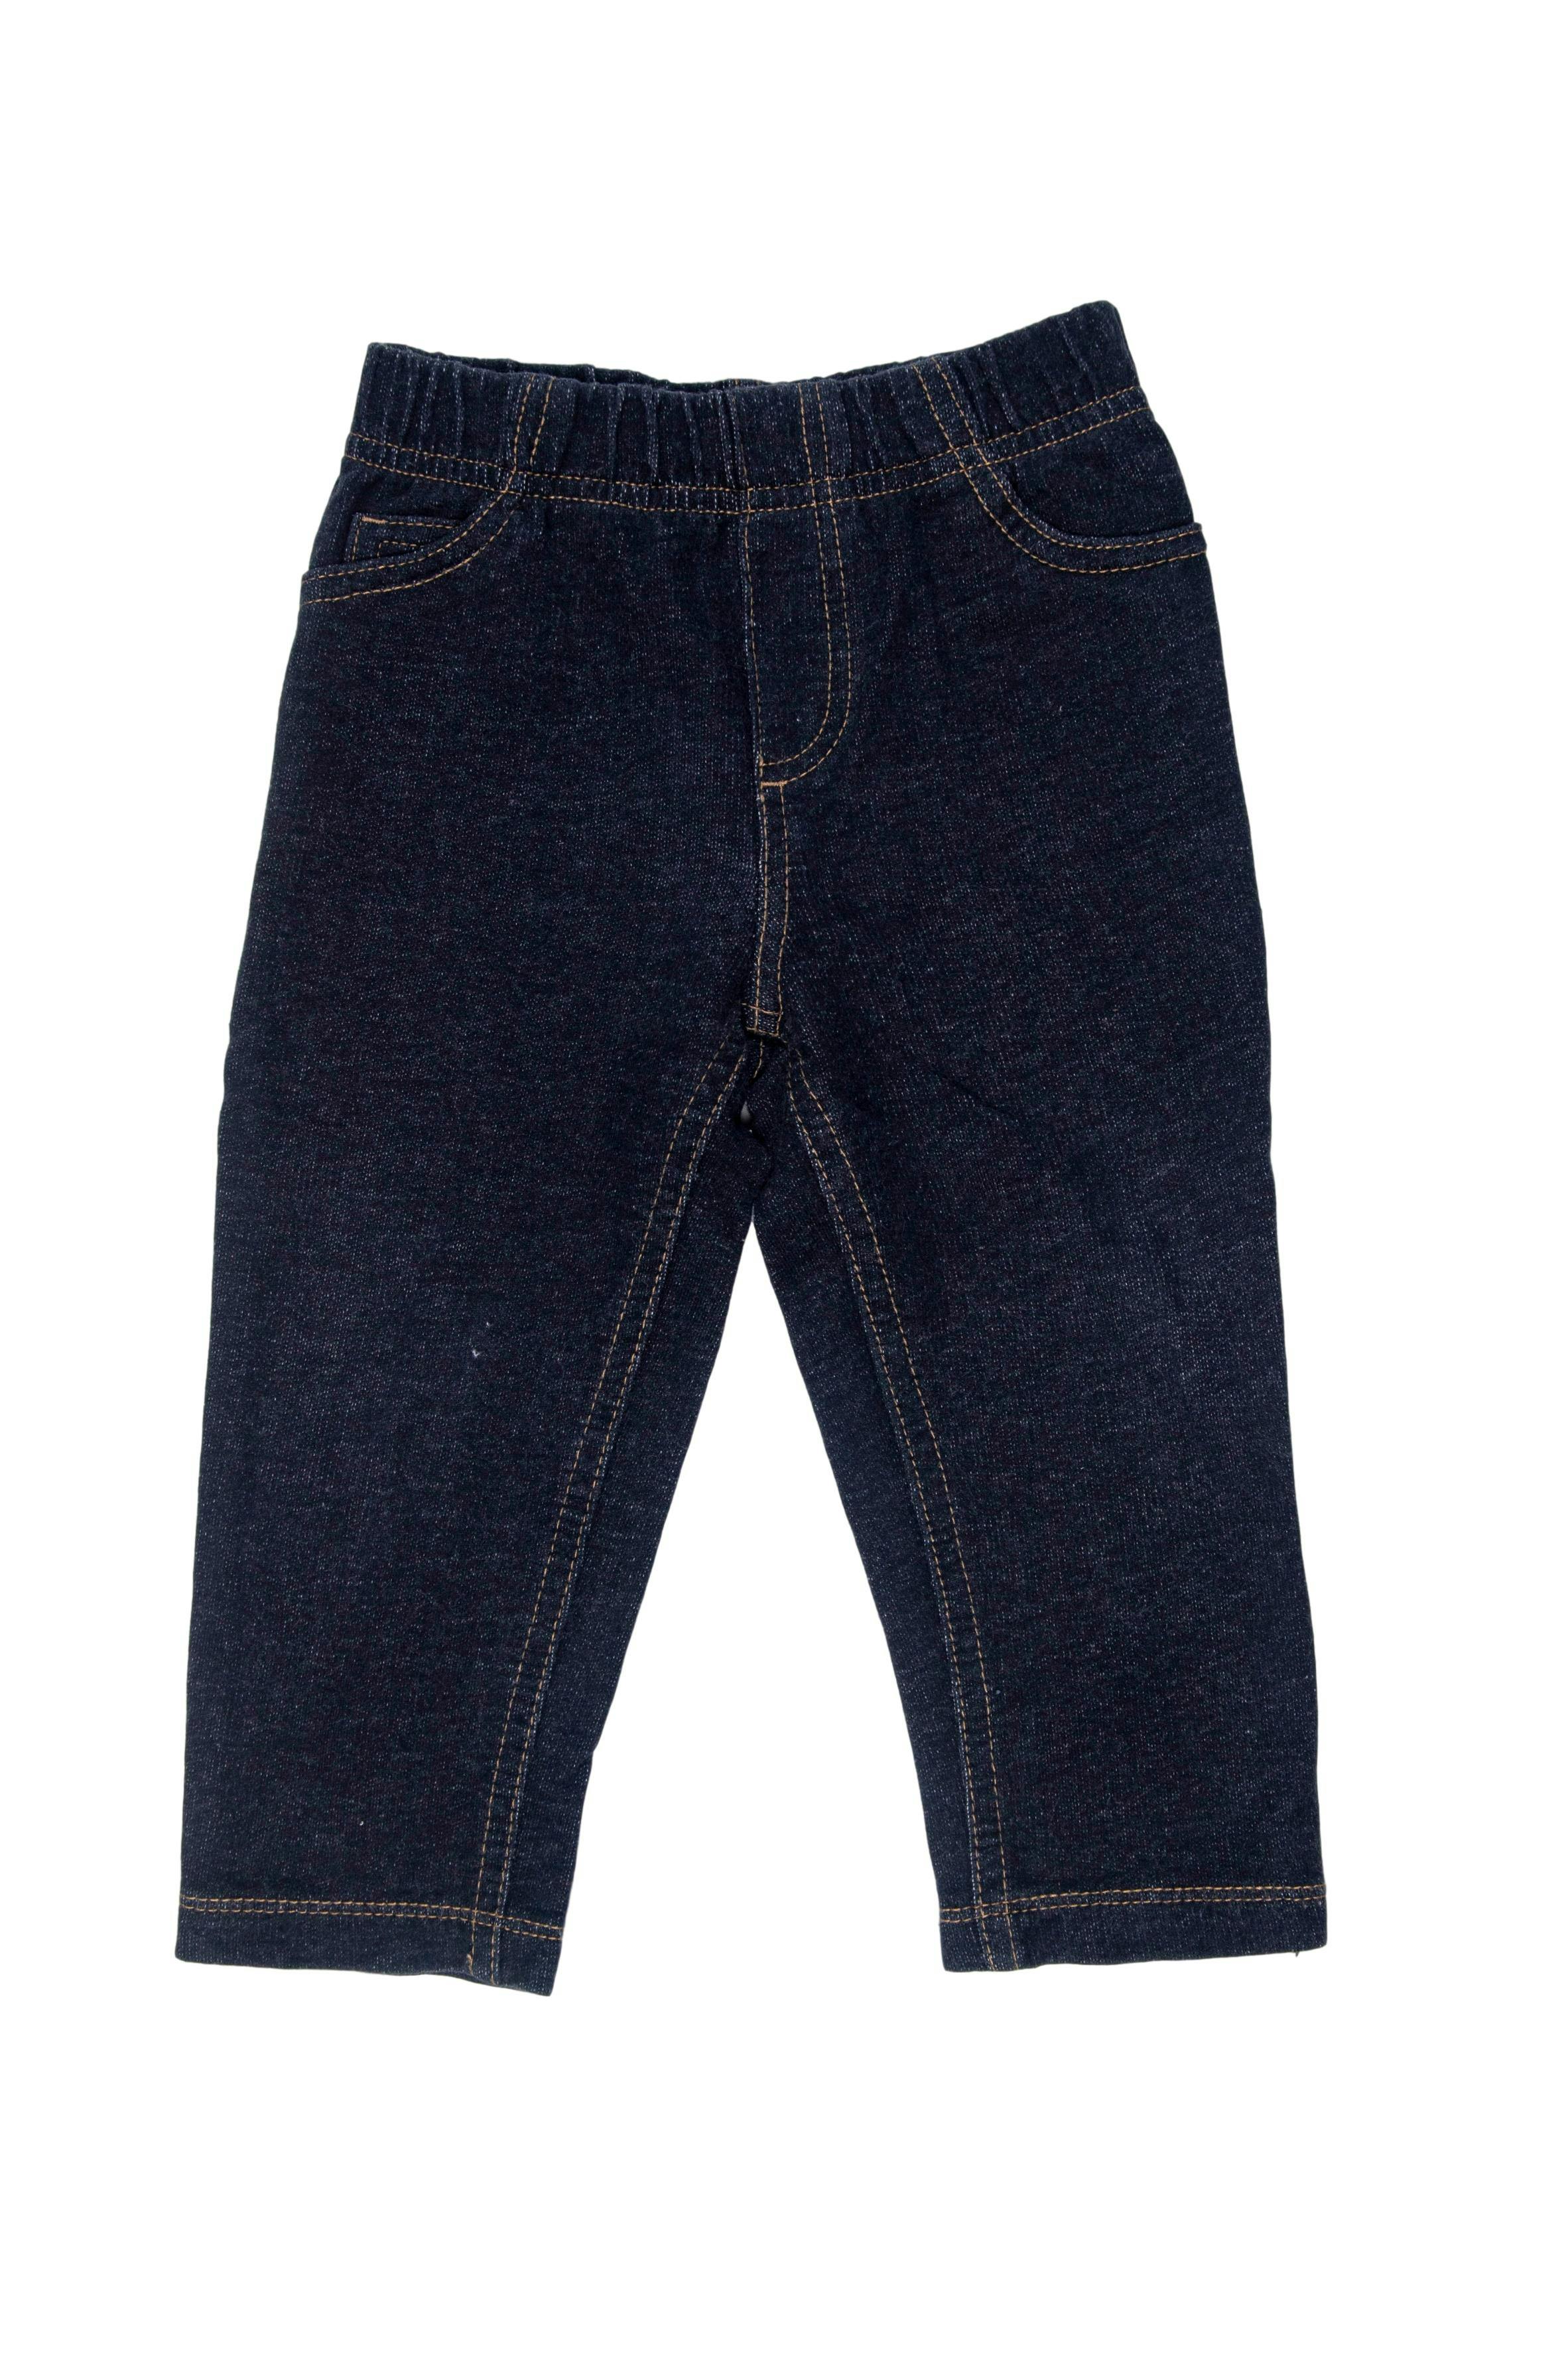 Pantalon 100% algodón simil jean. Es suave, textura de legging - Carter's